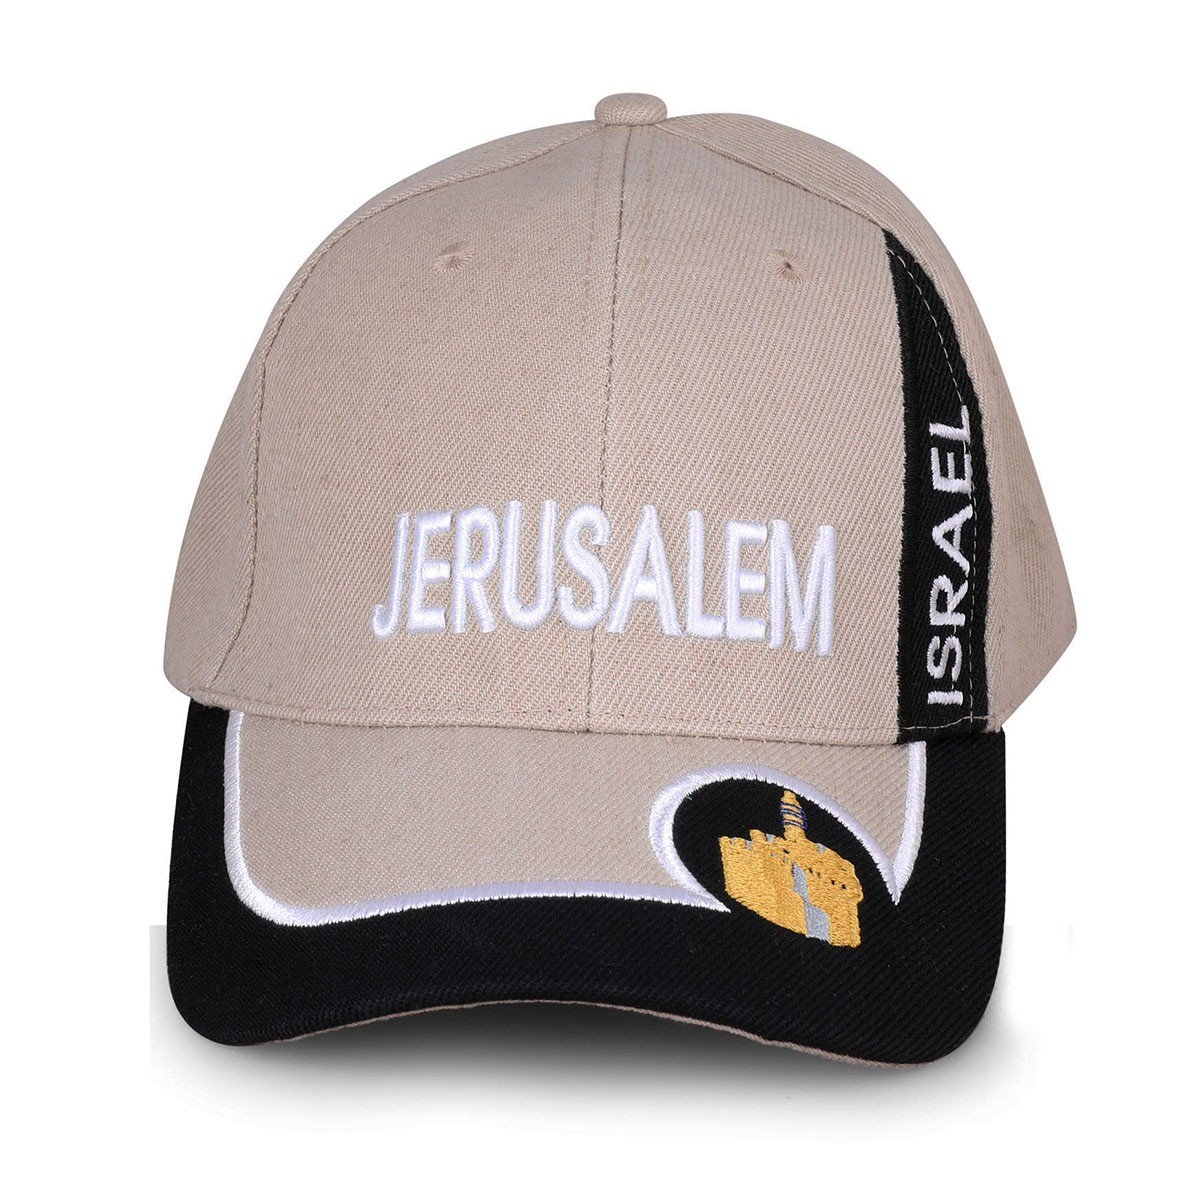 Black and Beige Jerusalem Baseball Cap - 1